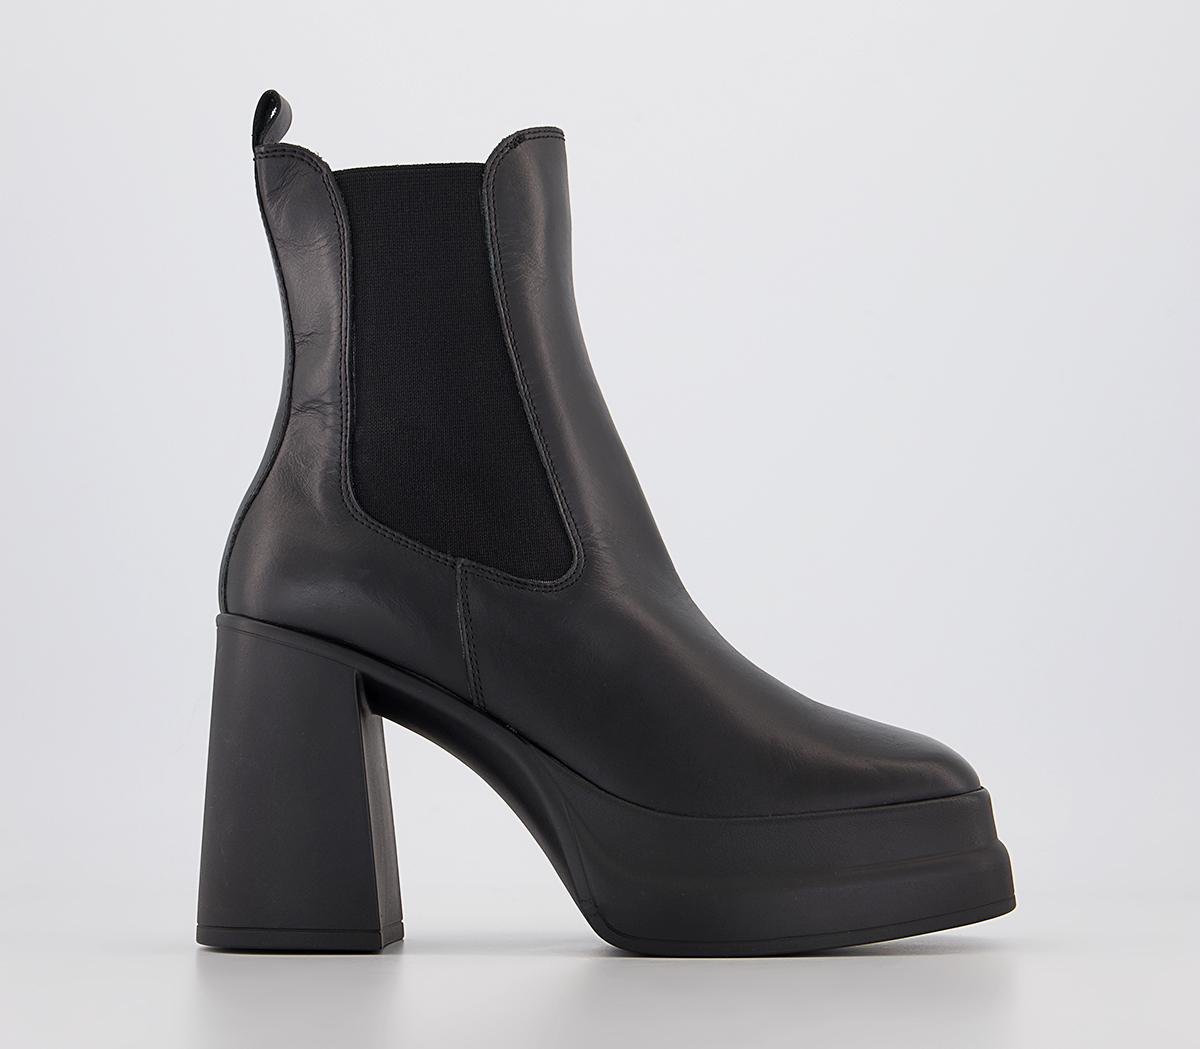 OFFICEArke Platform Block Heel Ankle BootsBlack Leather